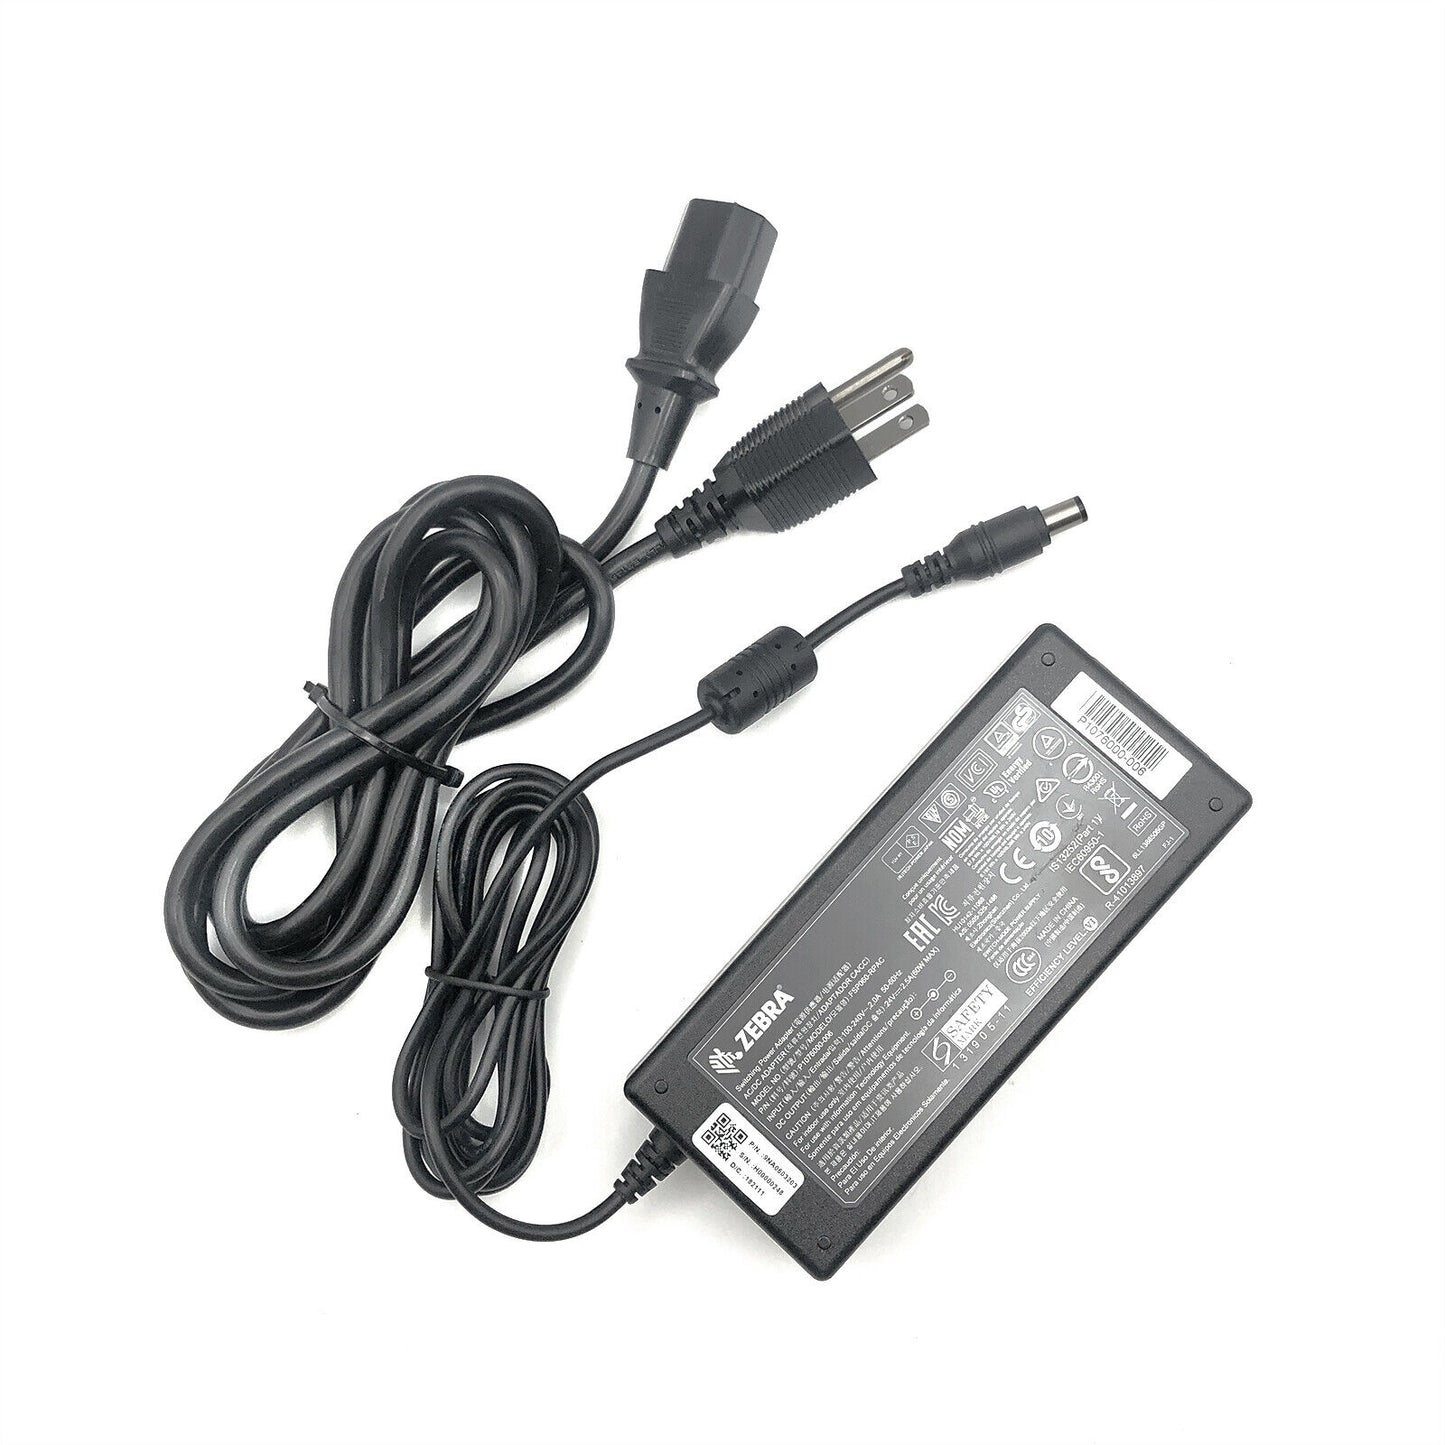 OEM AC Adapter FSP060-RPAC for Zebra GX420 GK420 ZD420 Printers w/PC